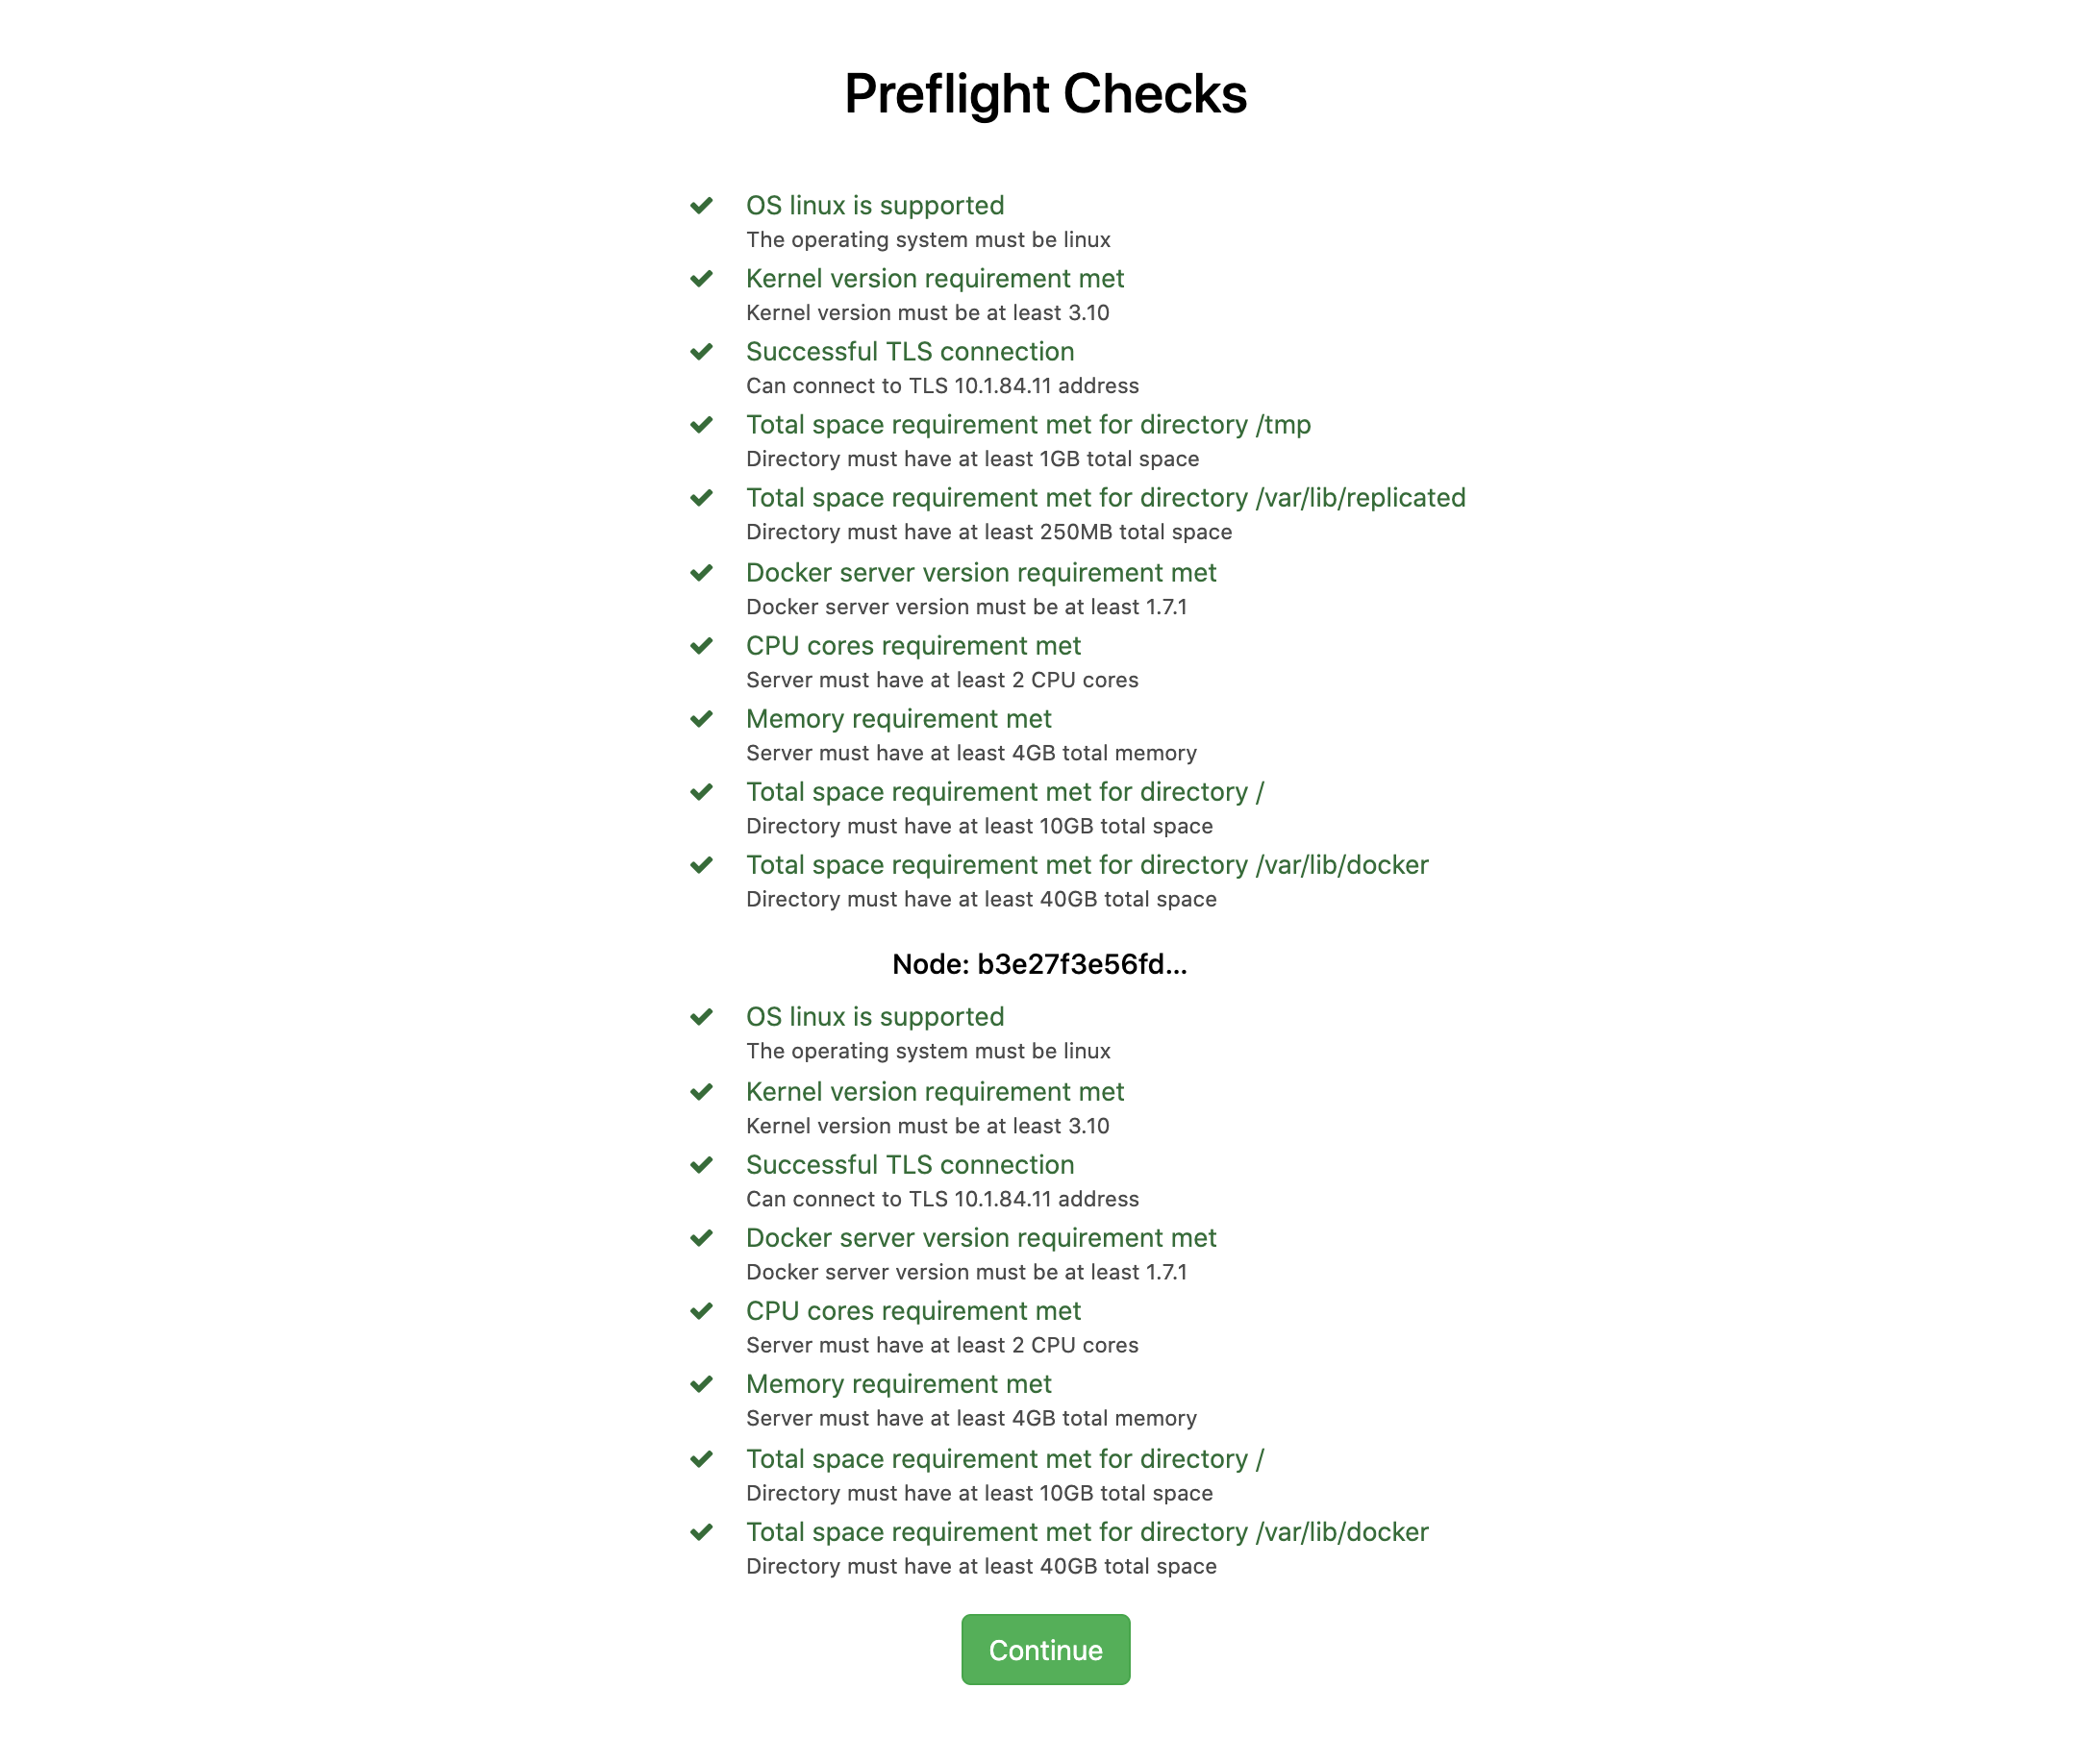 Preflight checklist